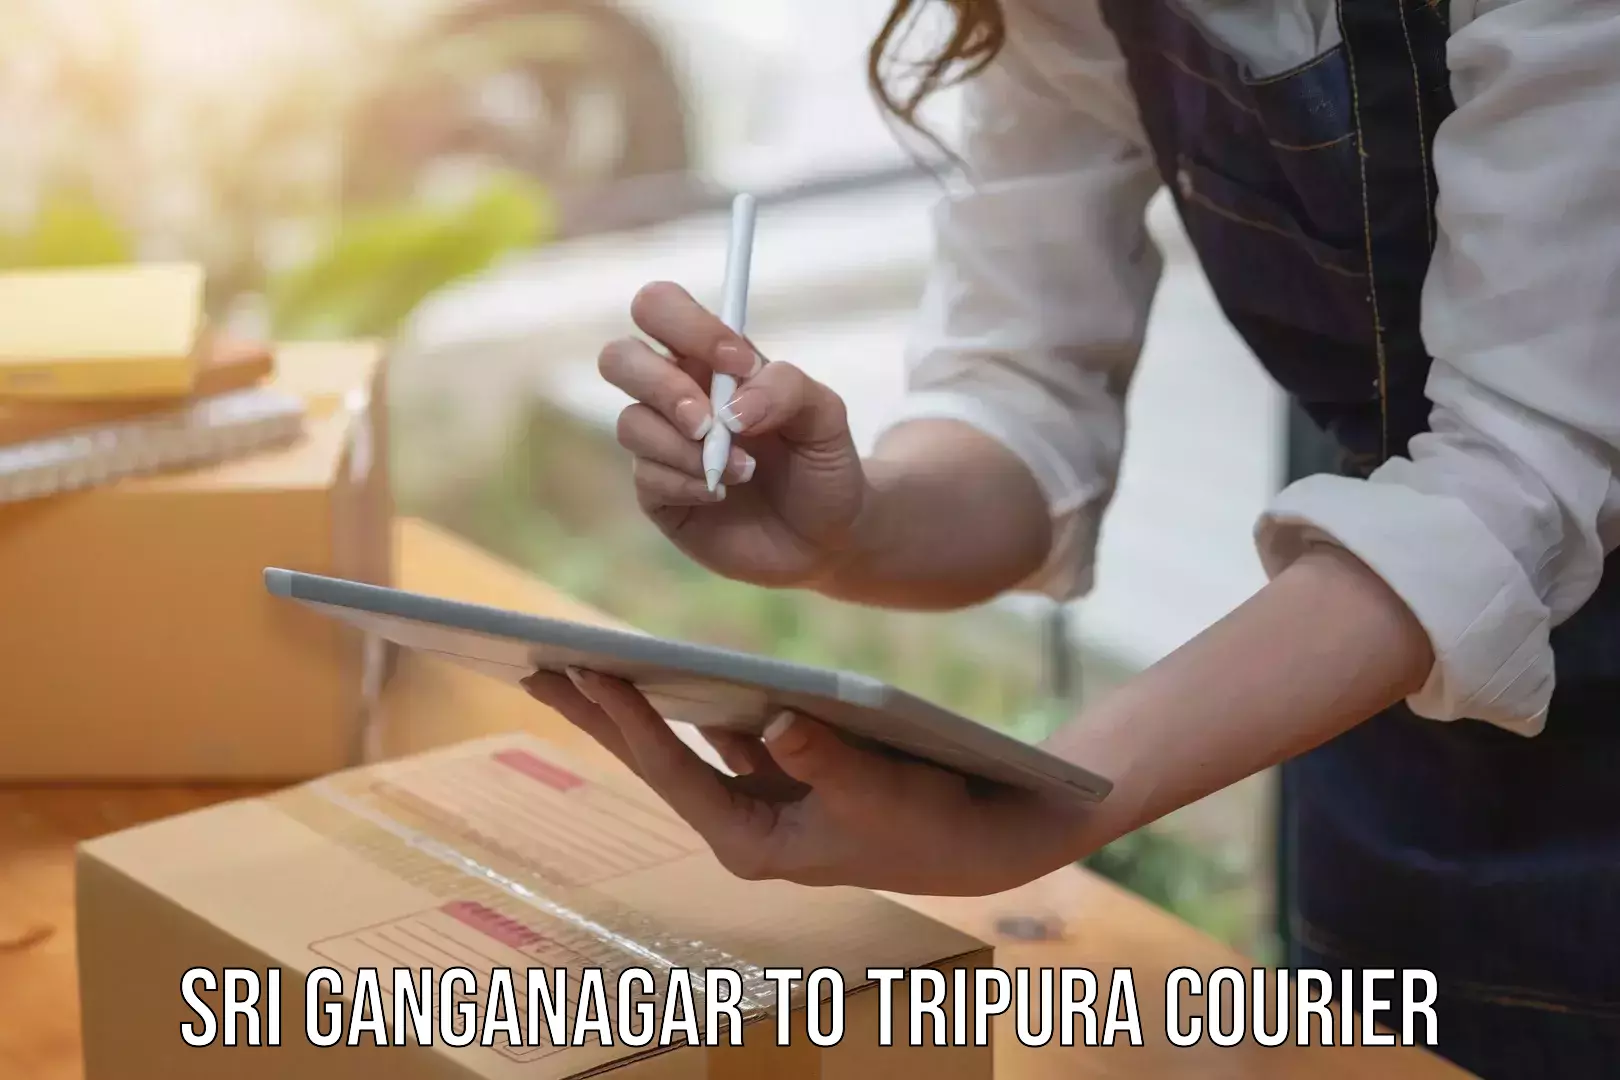 Courier service partnerships Sri Ganganagar to Tripura